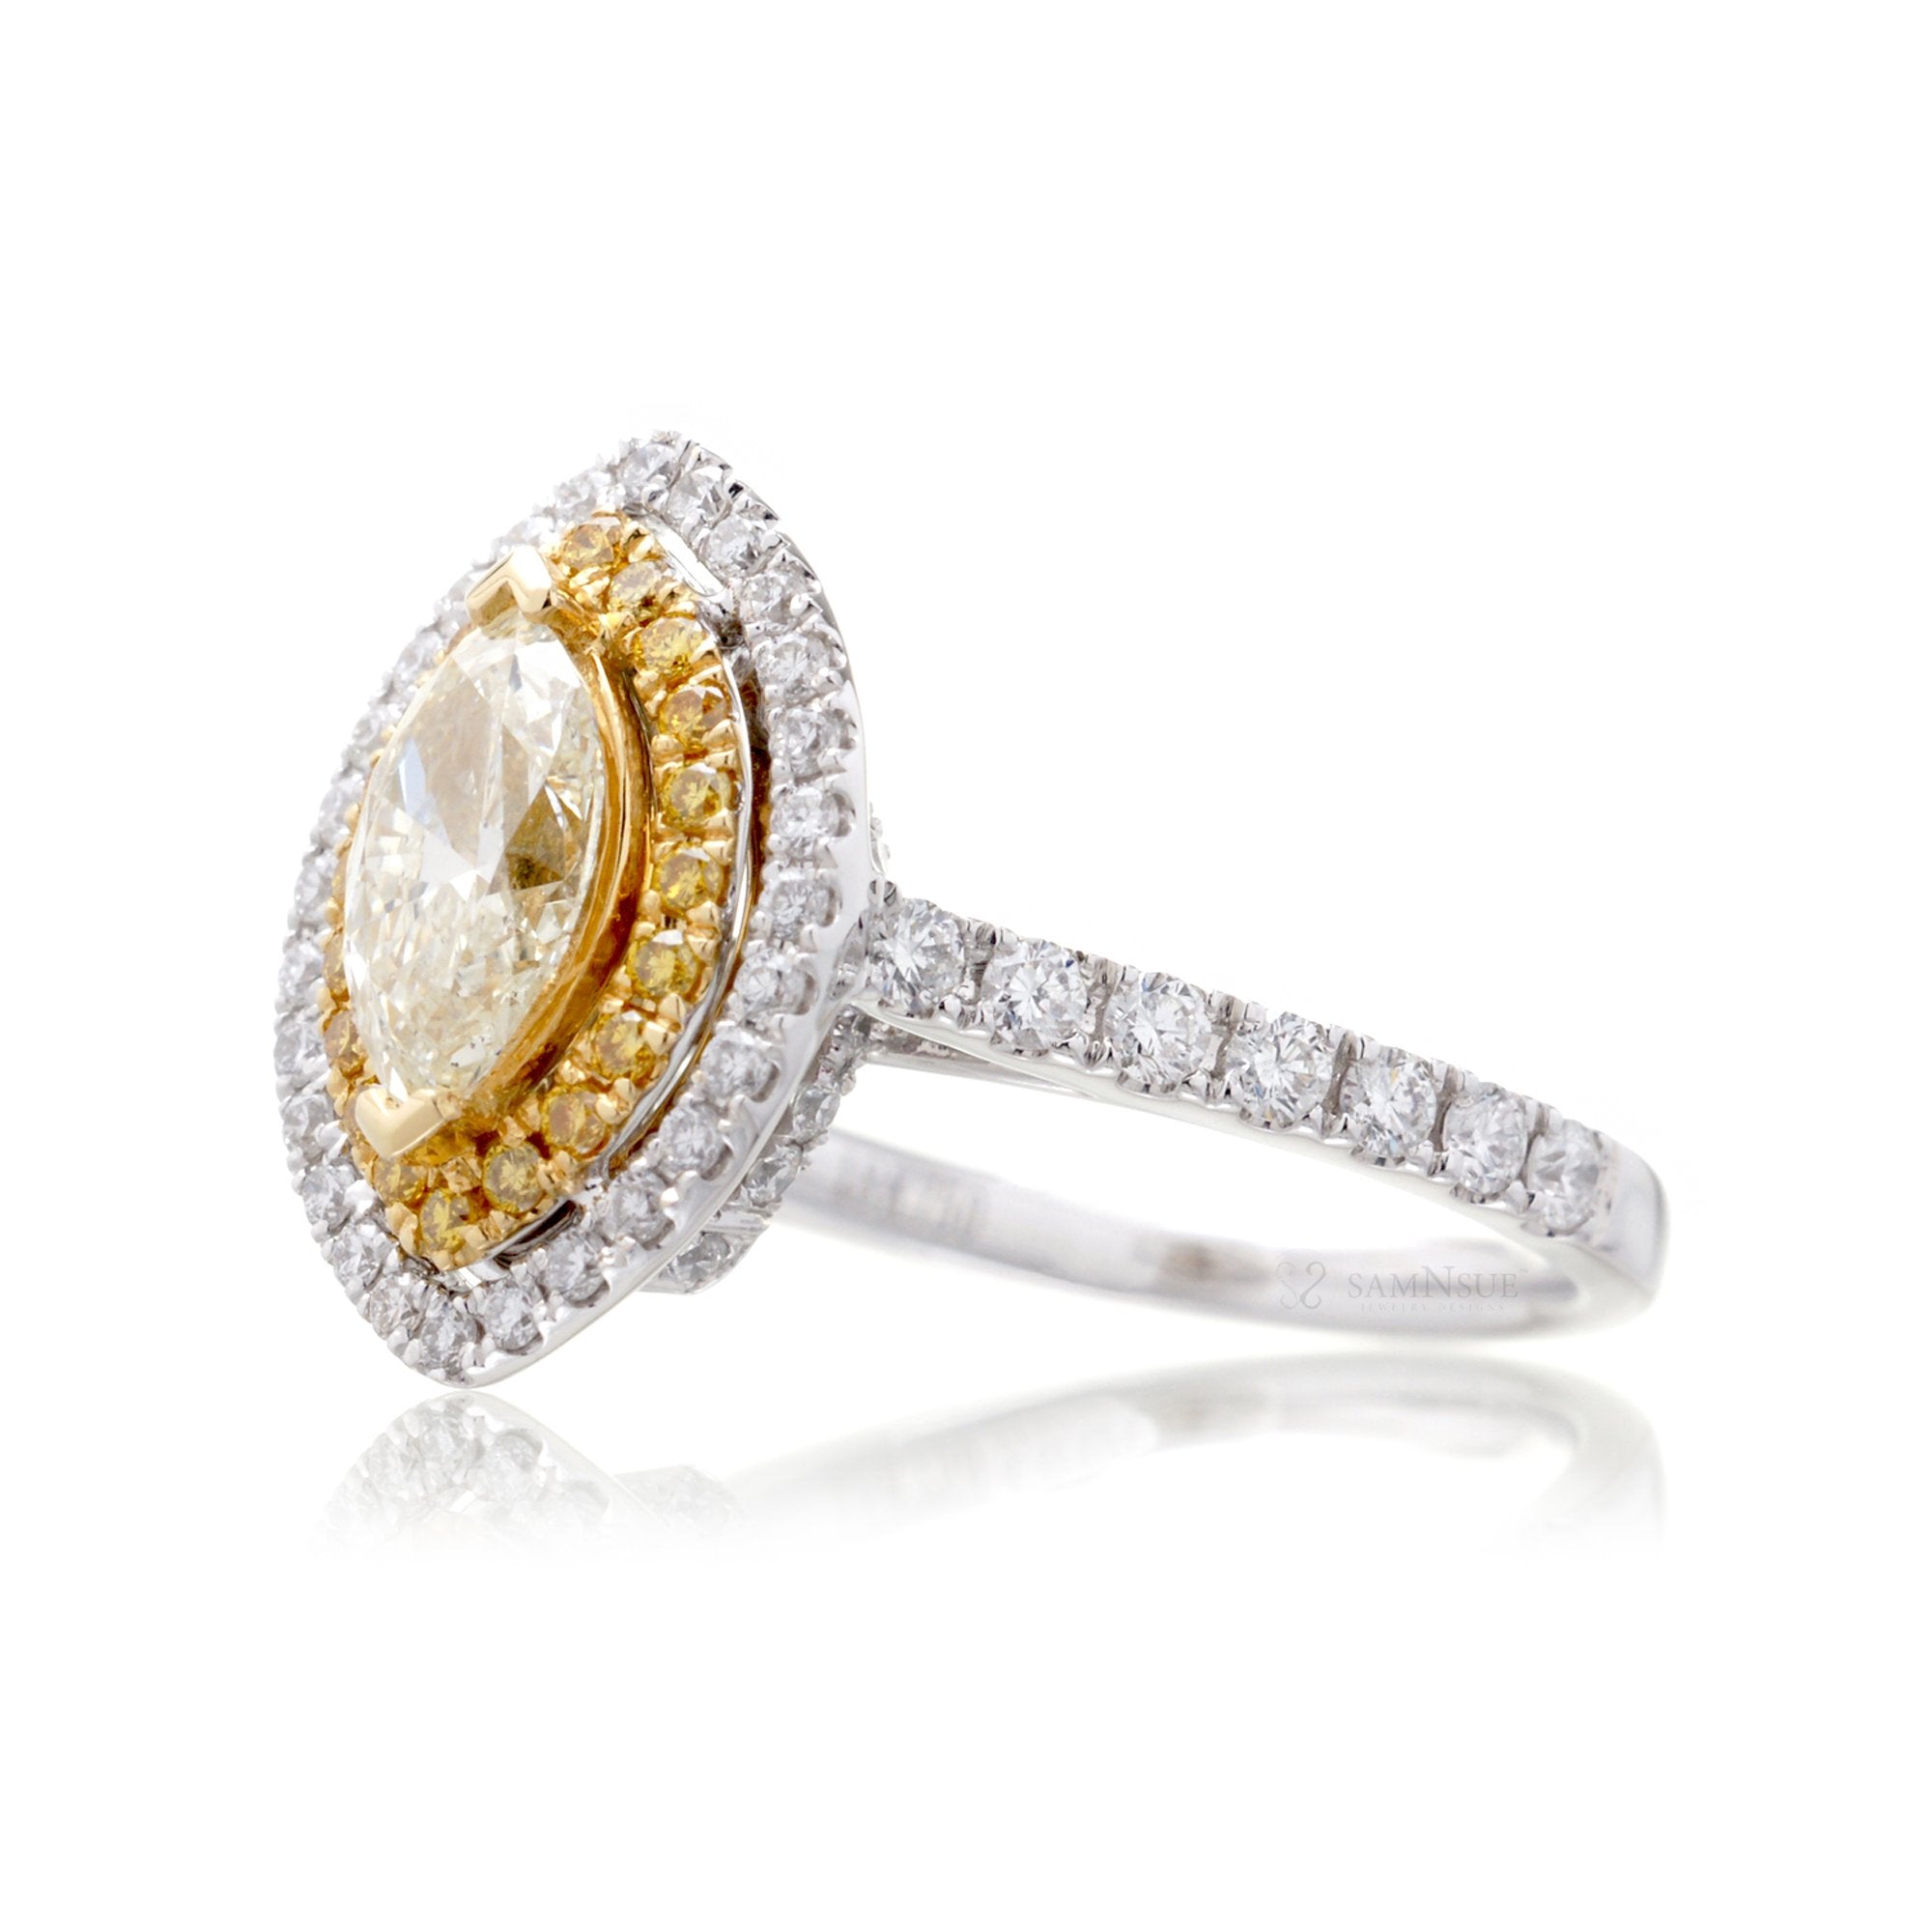 Marquise diamond double halo engagement ring